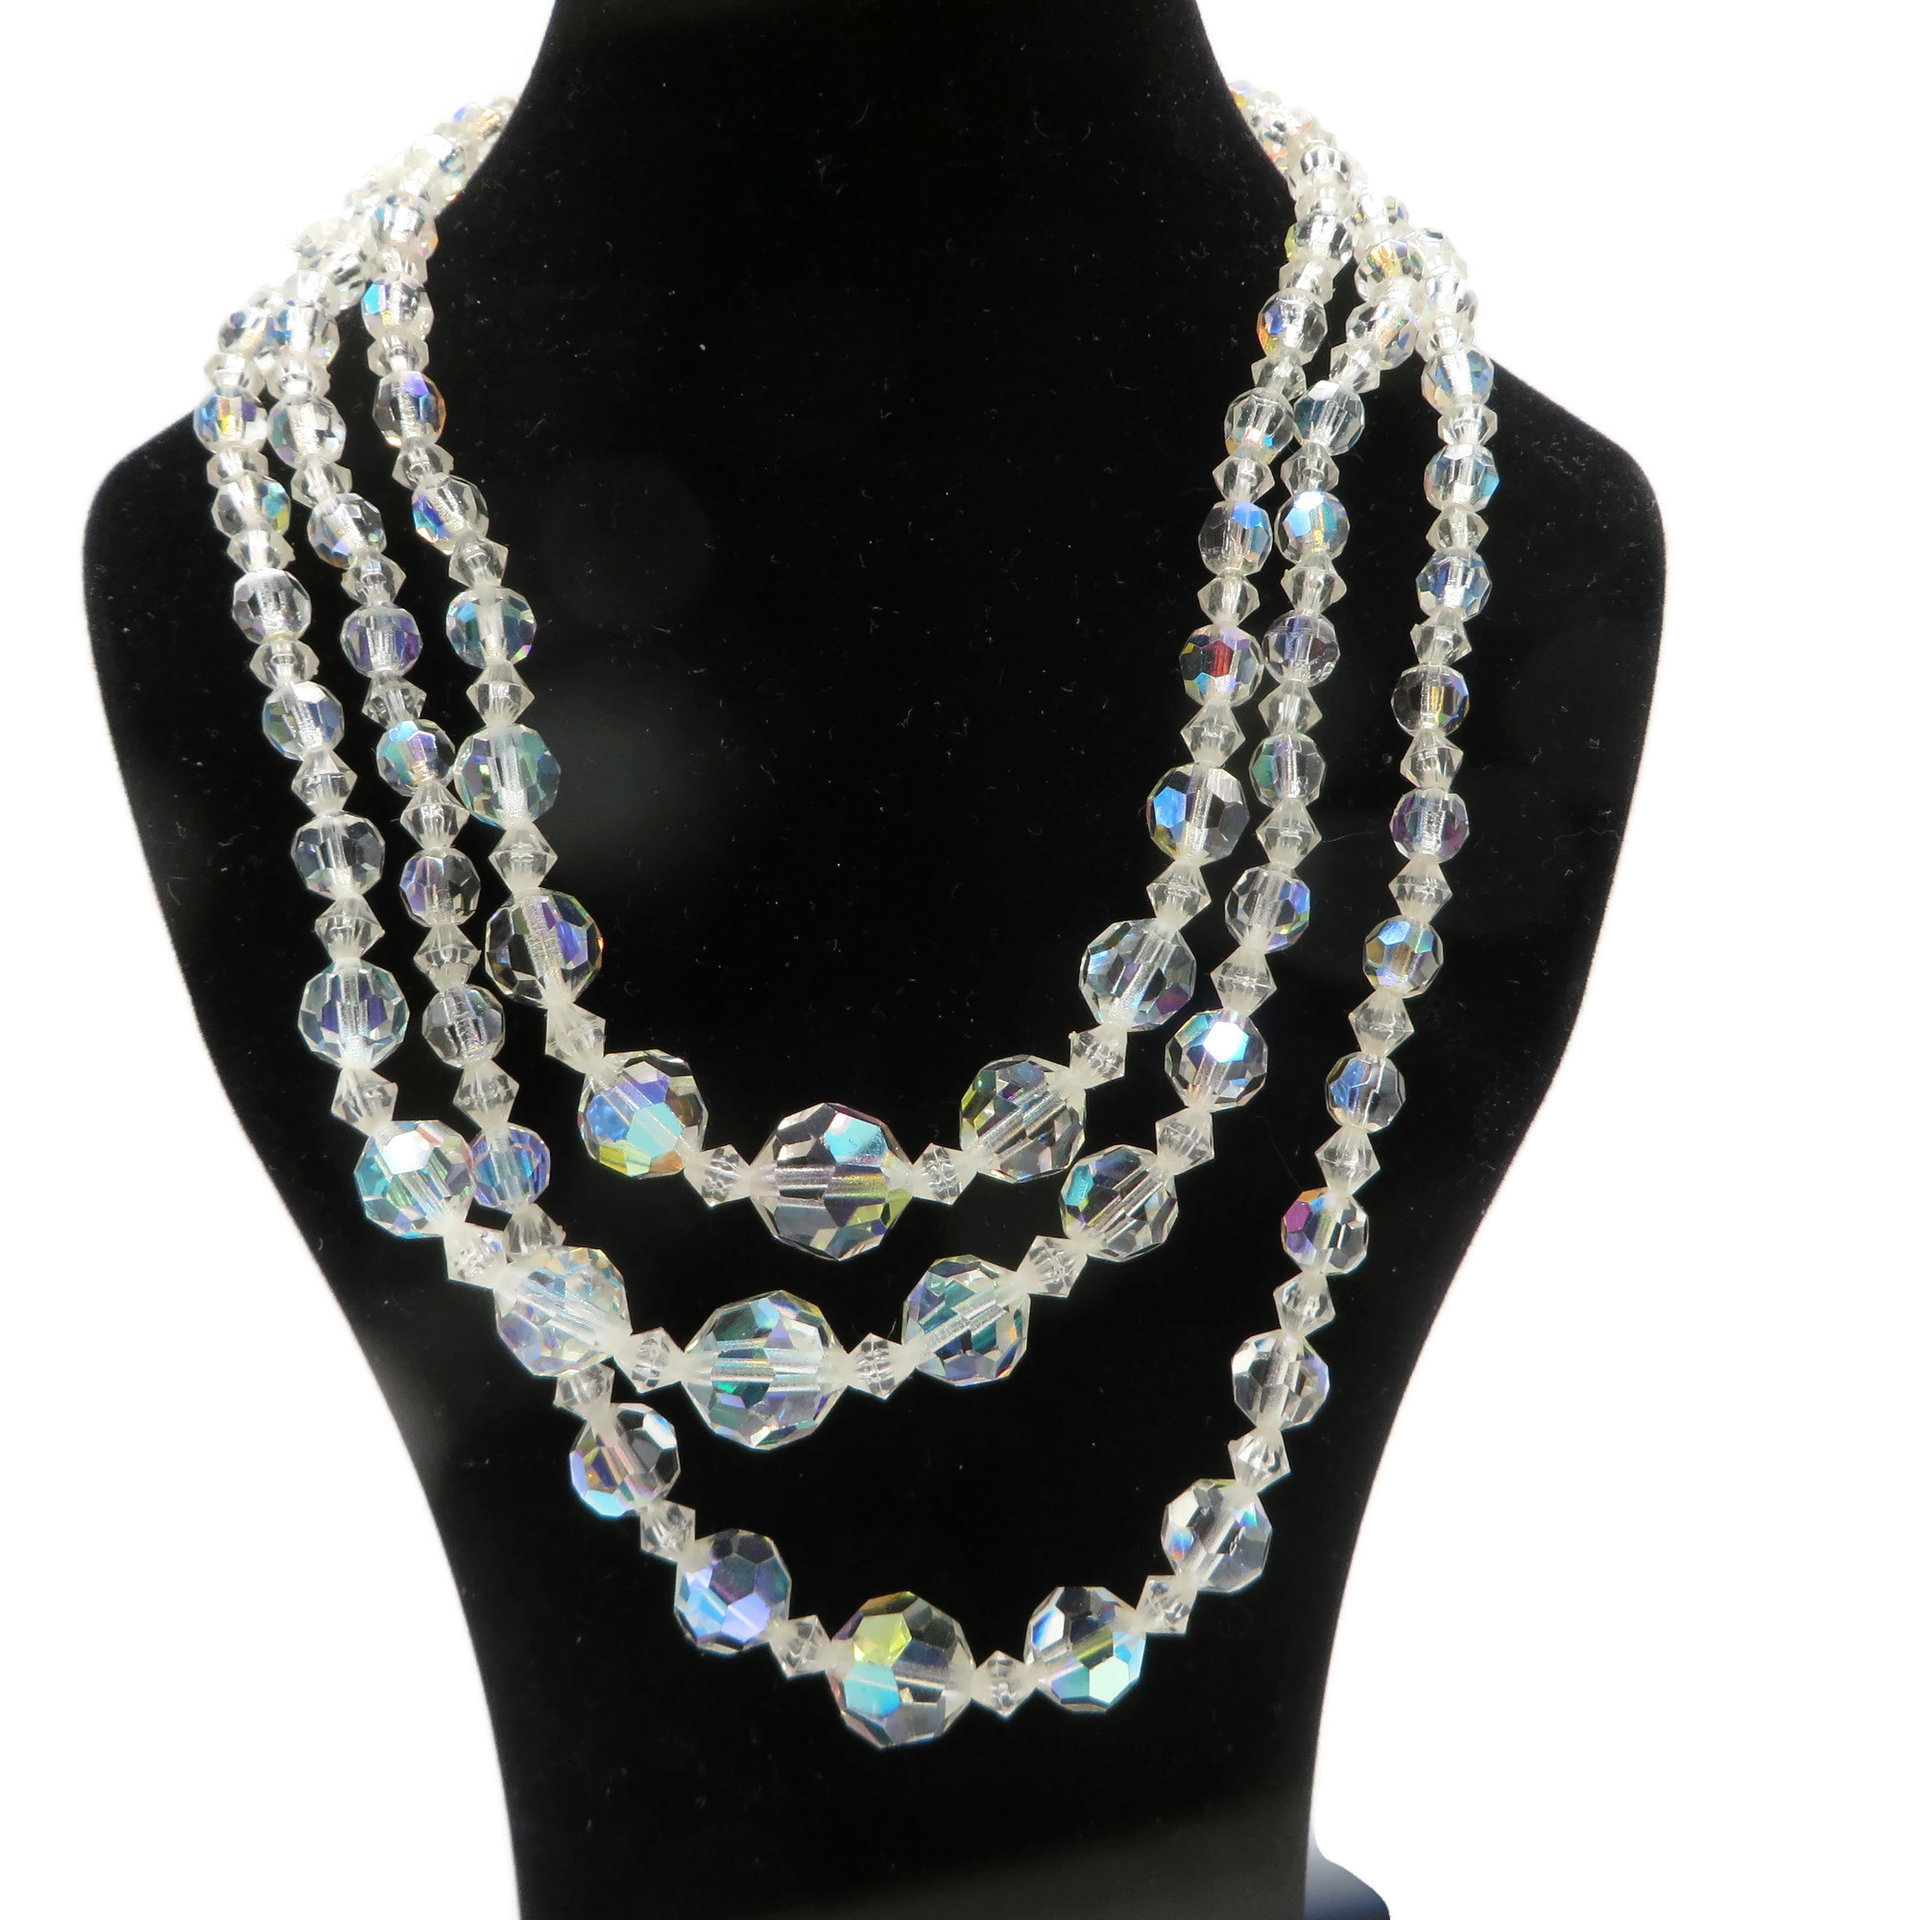 Vintage Crystal Multi-Strand Necklace 15 Inch Length